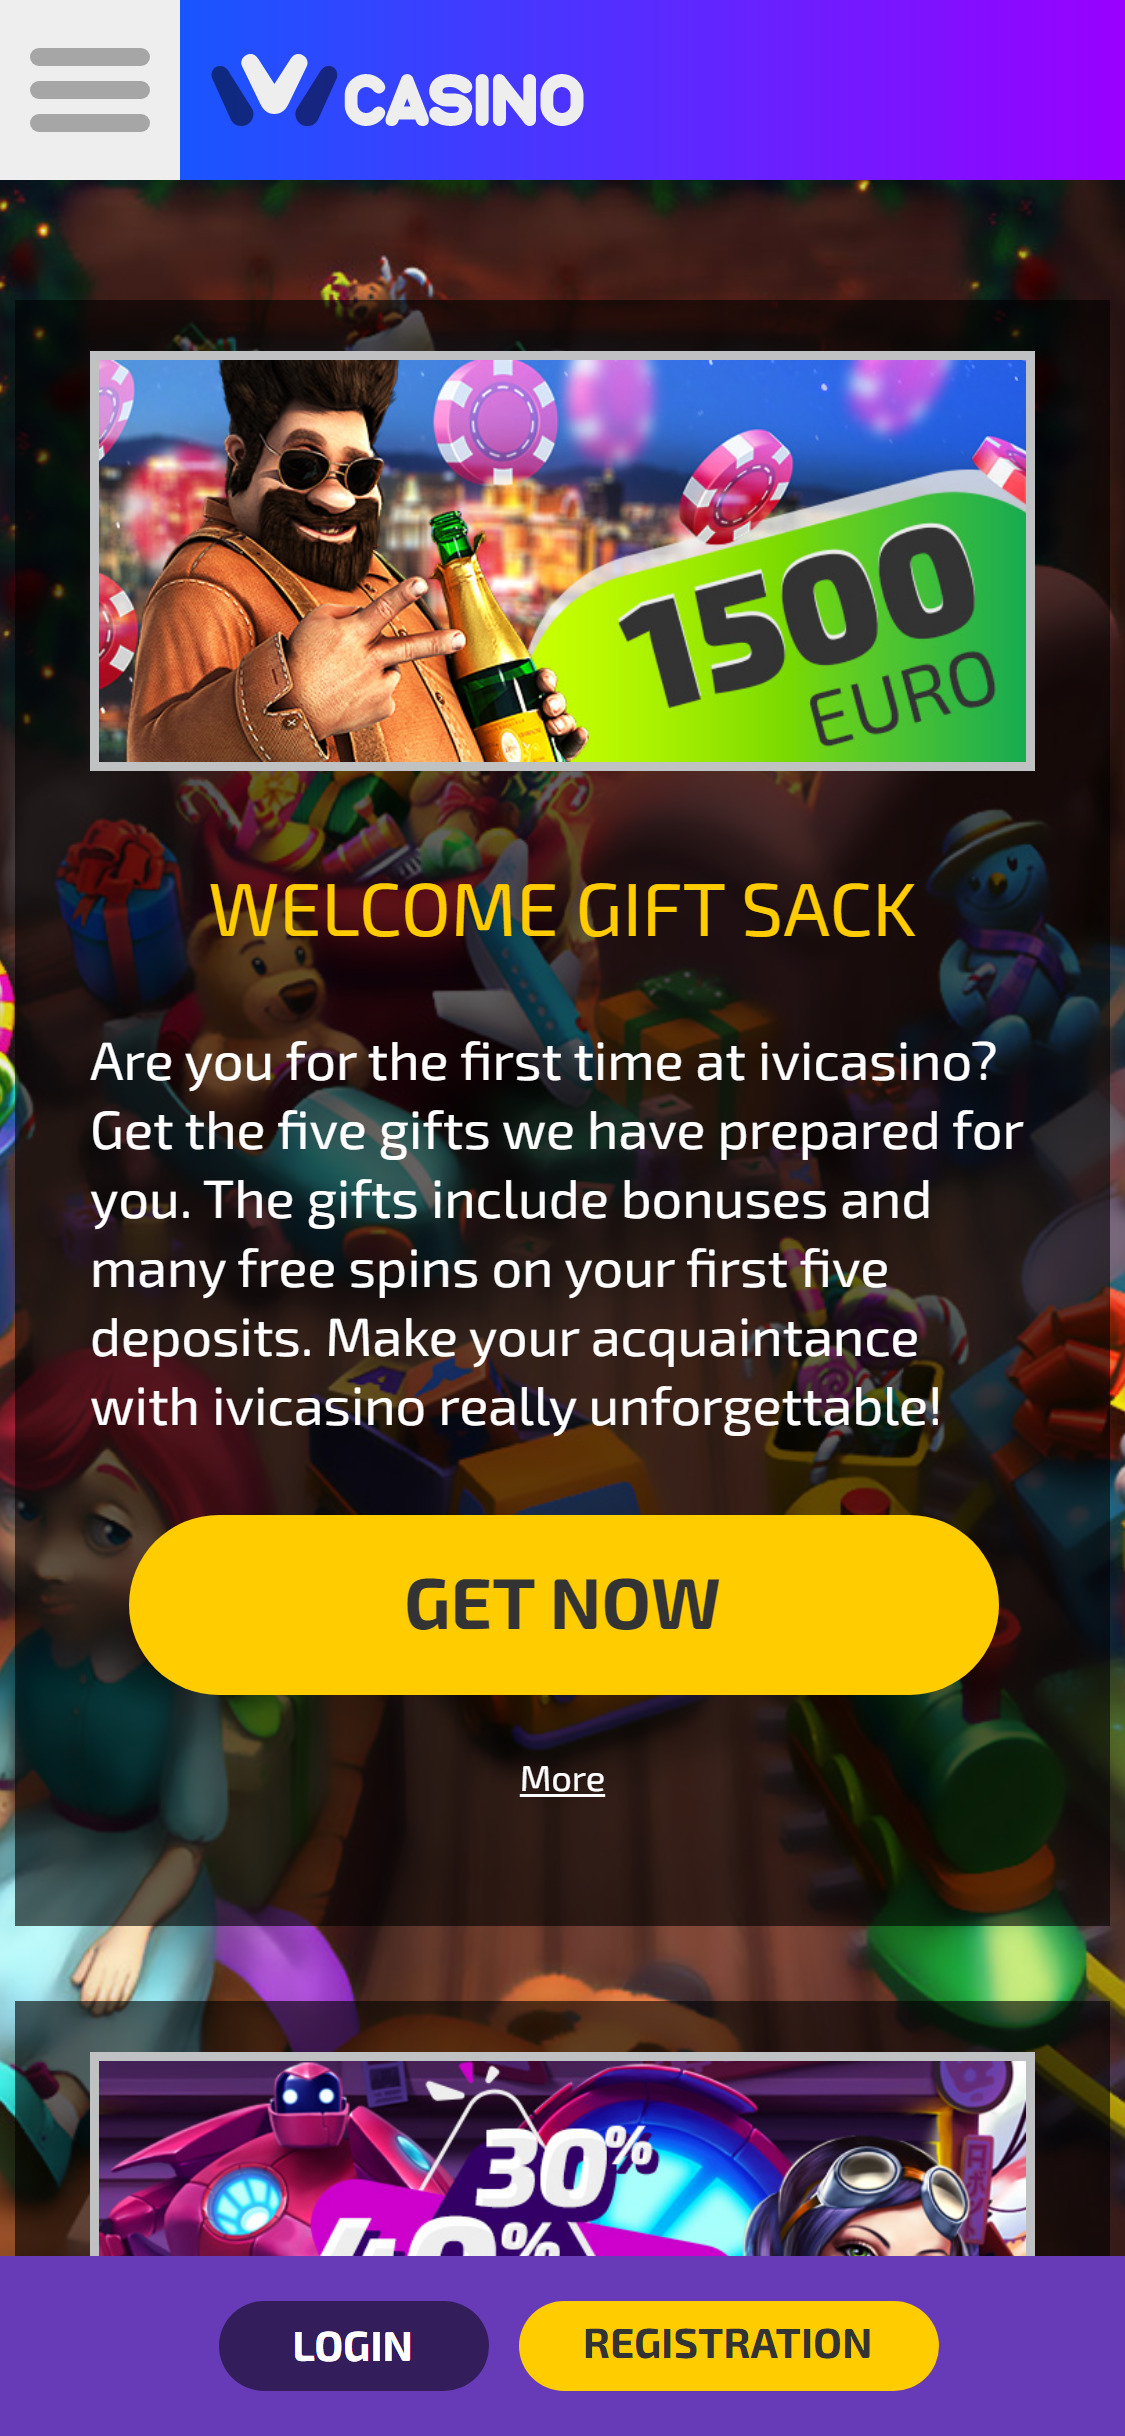 Ivi Casino Mobile No Deposit Bonus Review